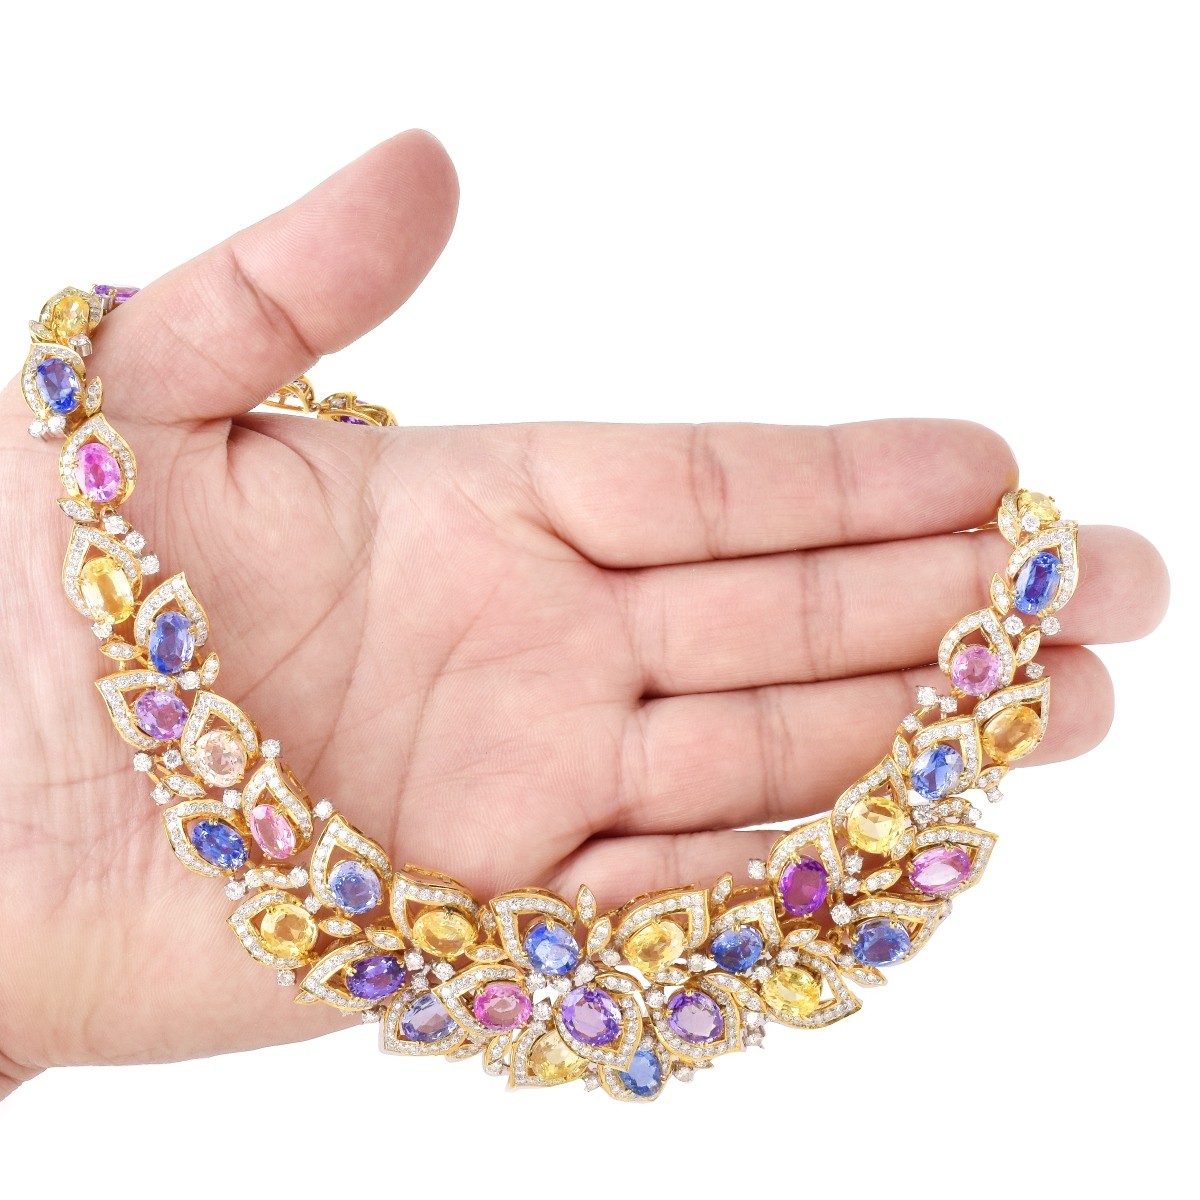 91.66ct TW Sapphire, Diamond and 18K Necklace